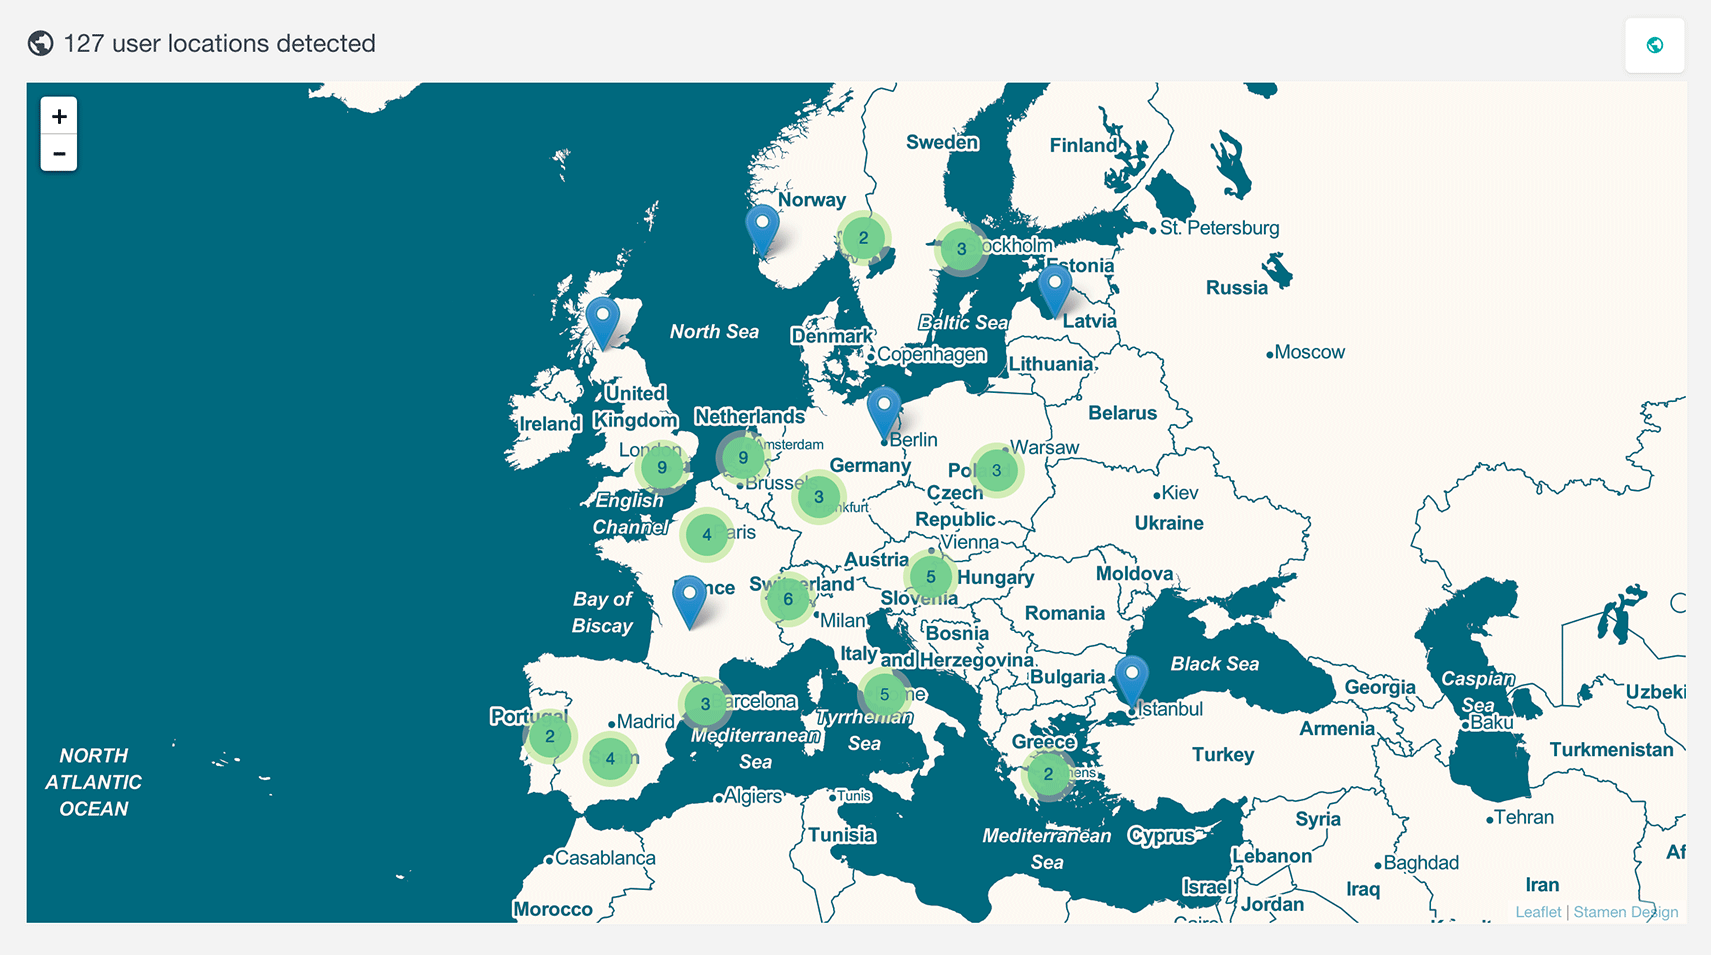 wordpress users geolocation interactive map